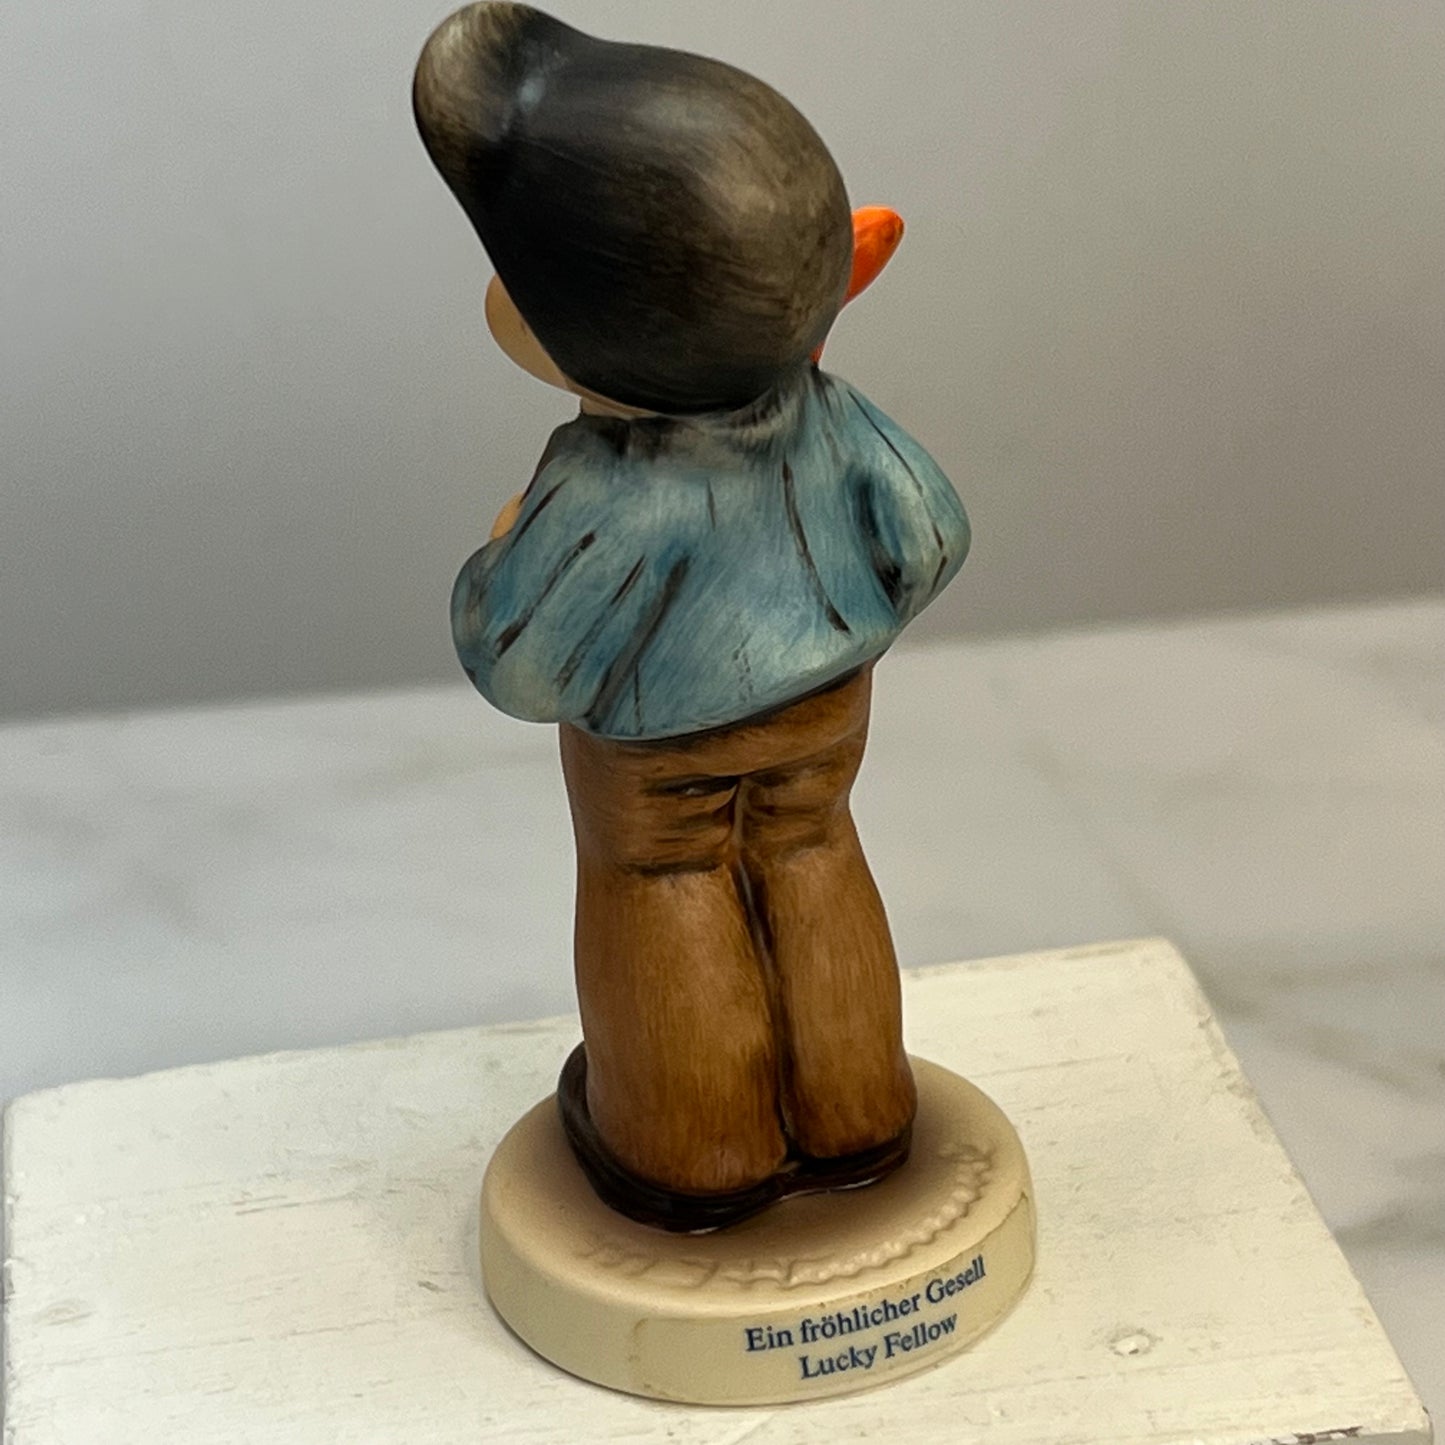 1992 Hummel "Lucky Fellow" HUM 560 M. I. Hummel Club Figurine